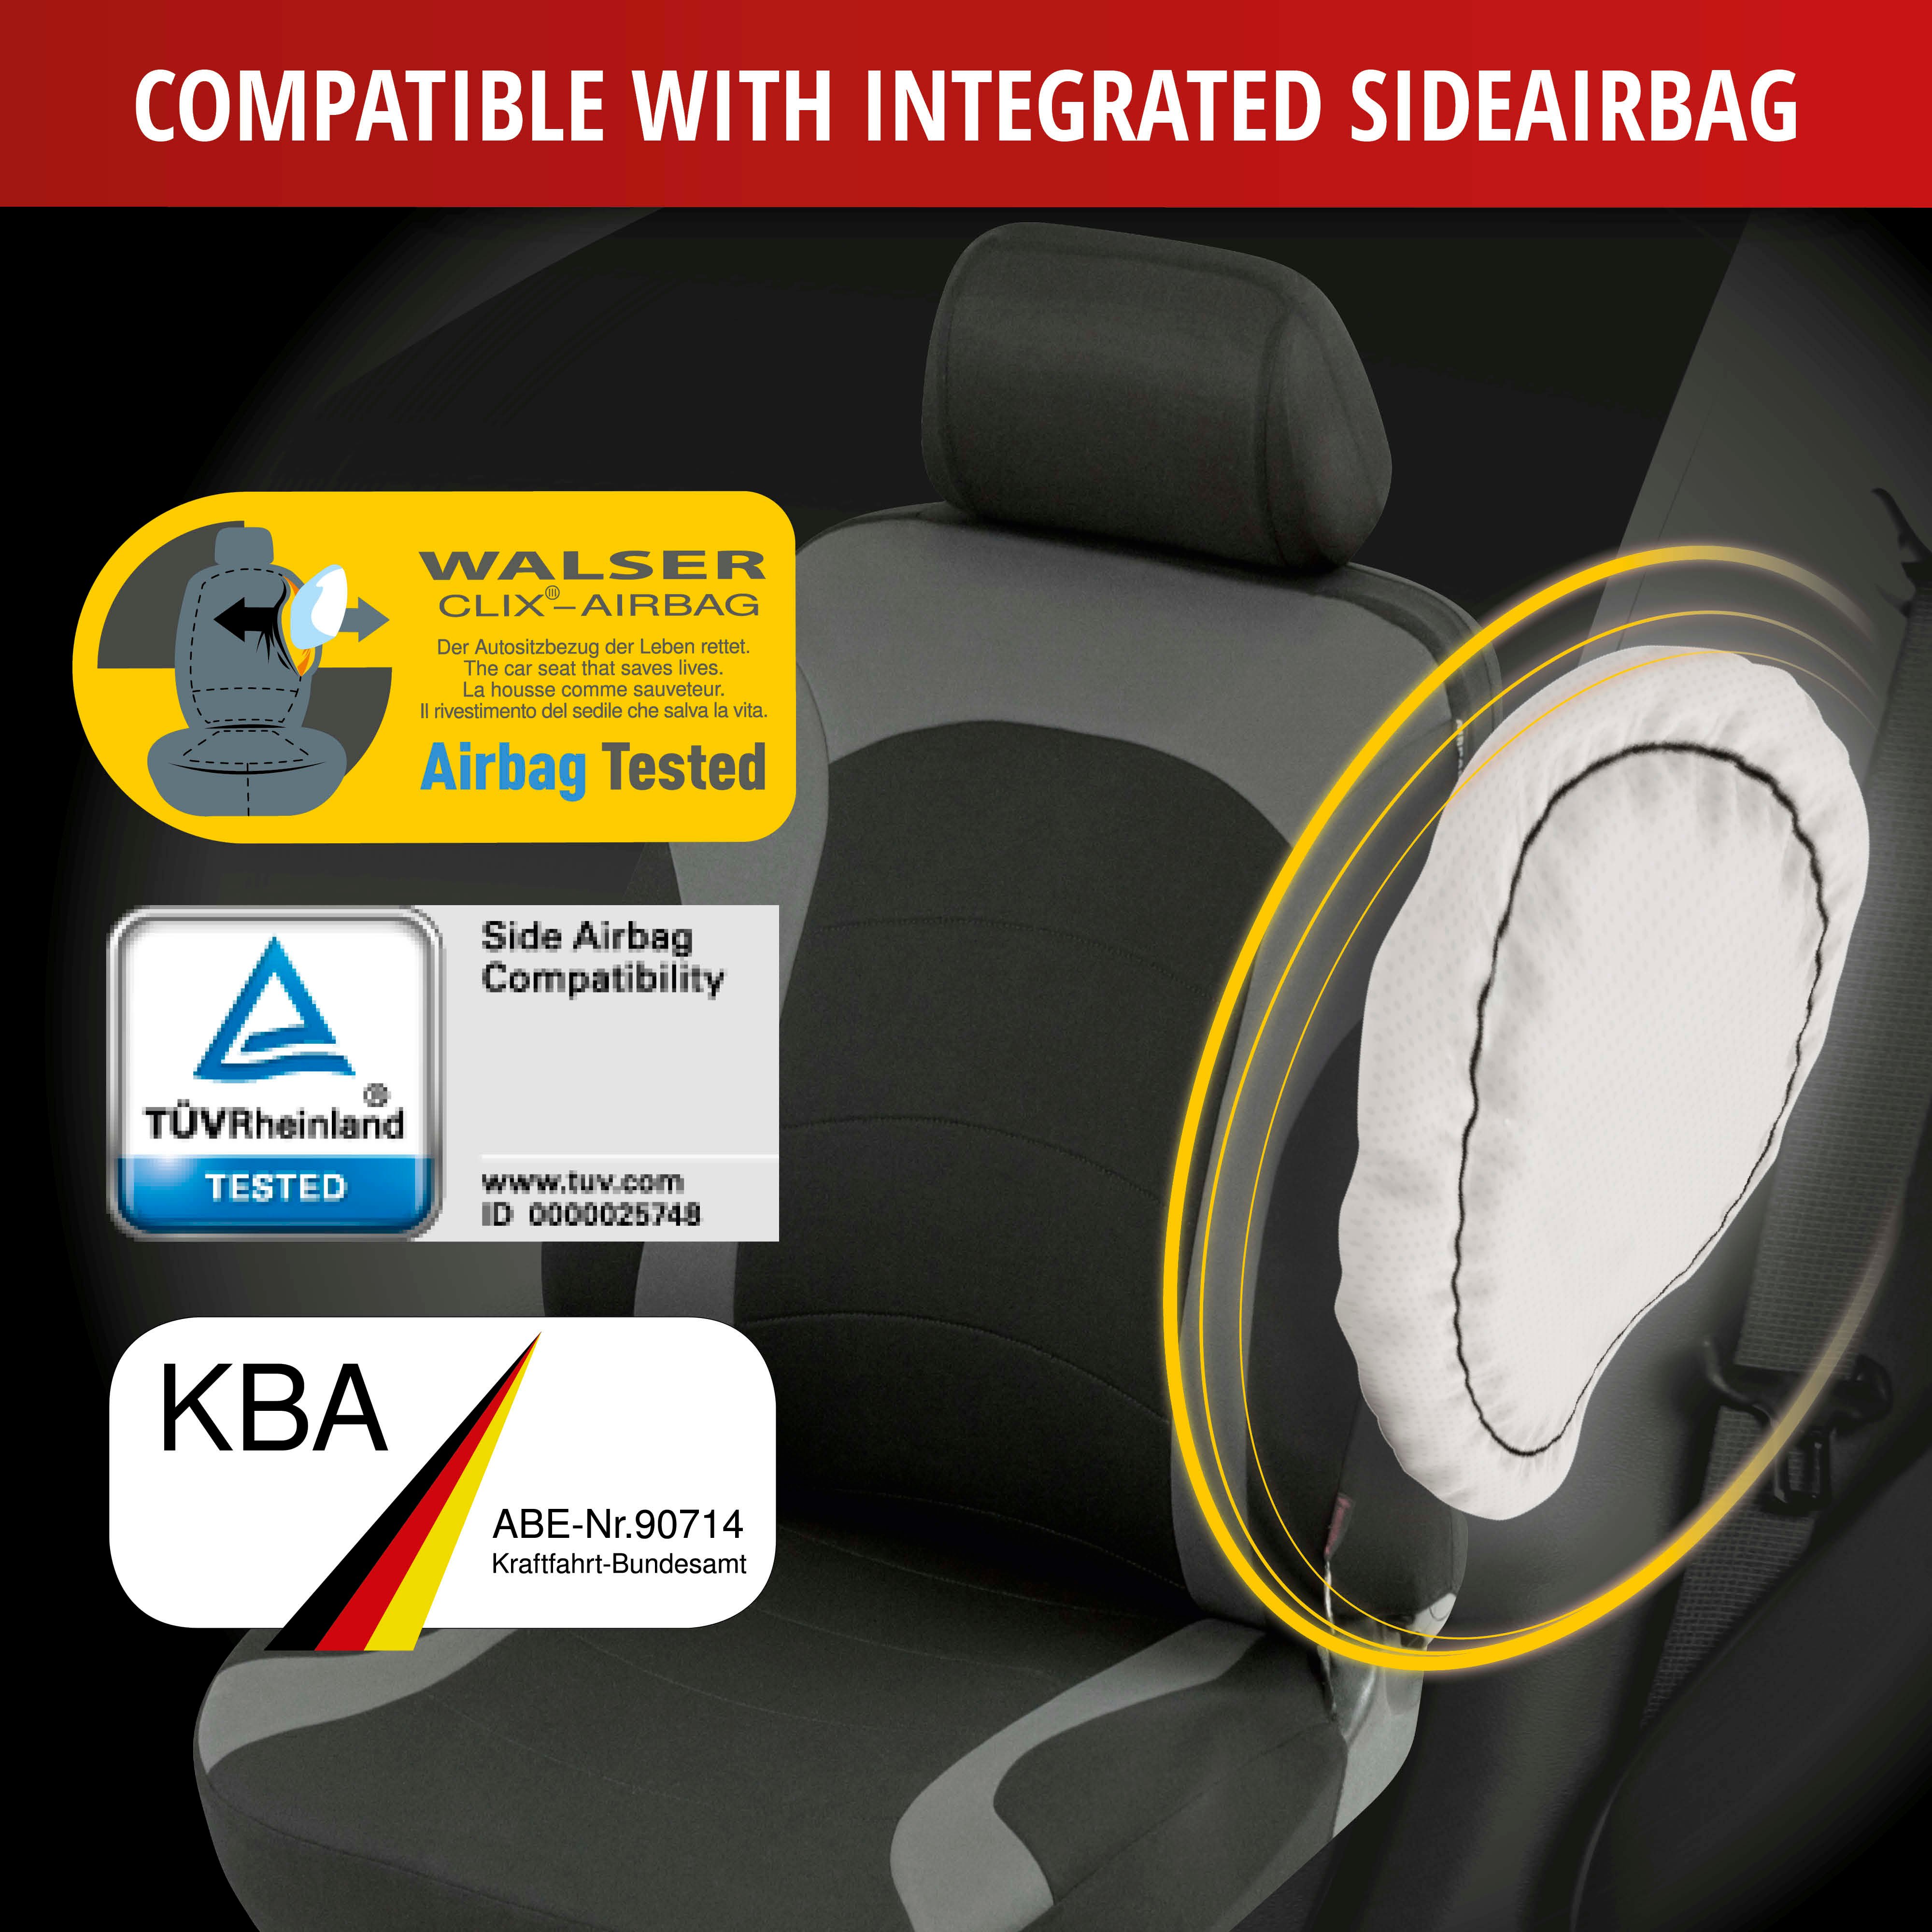 ZIPP IT Premium Inde Auto Seat cover with zipper system